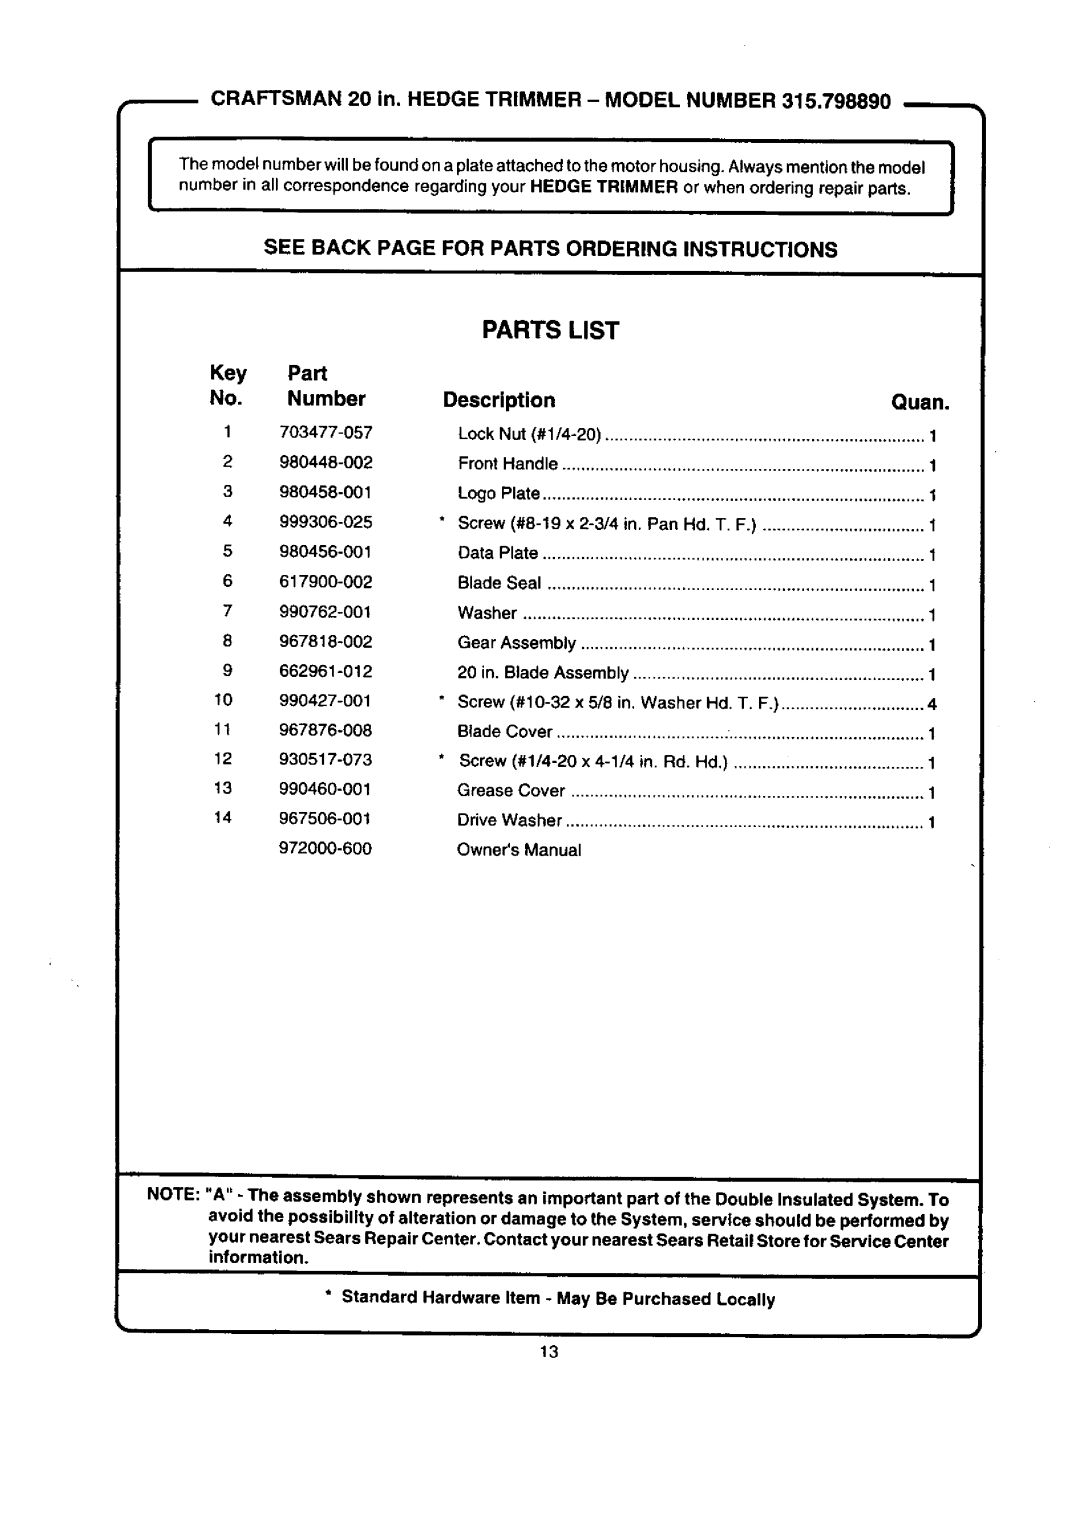 Craftsman 315.79889 owner manual Parts List, Key Pa No. Number, Description 